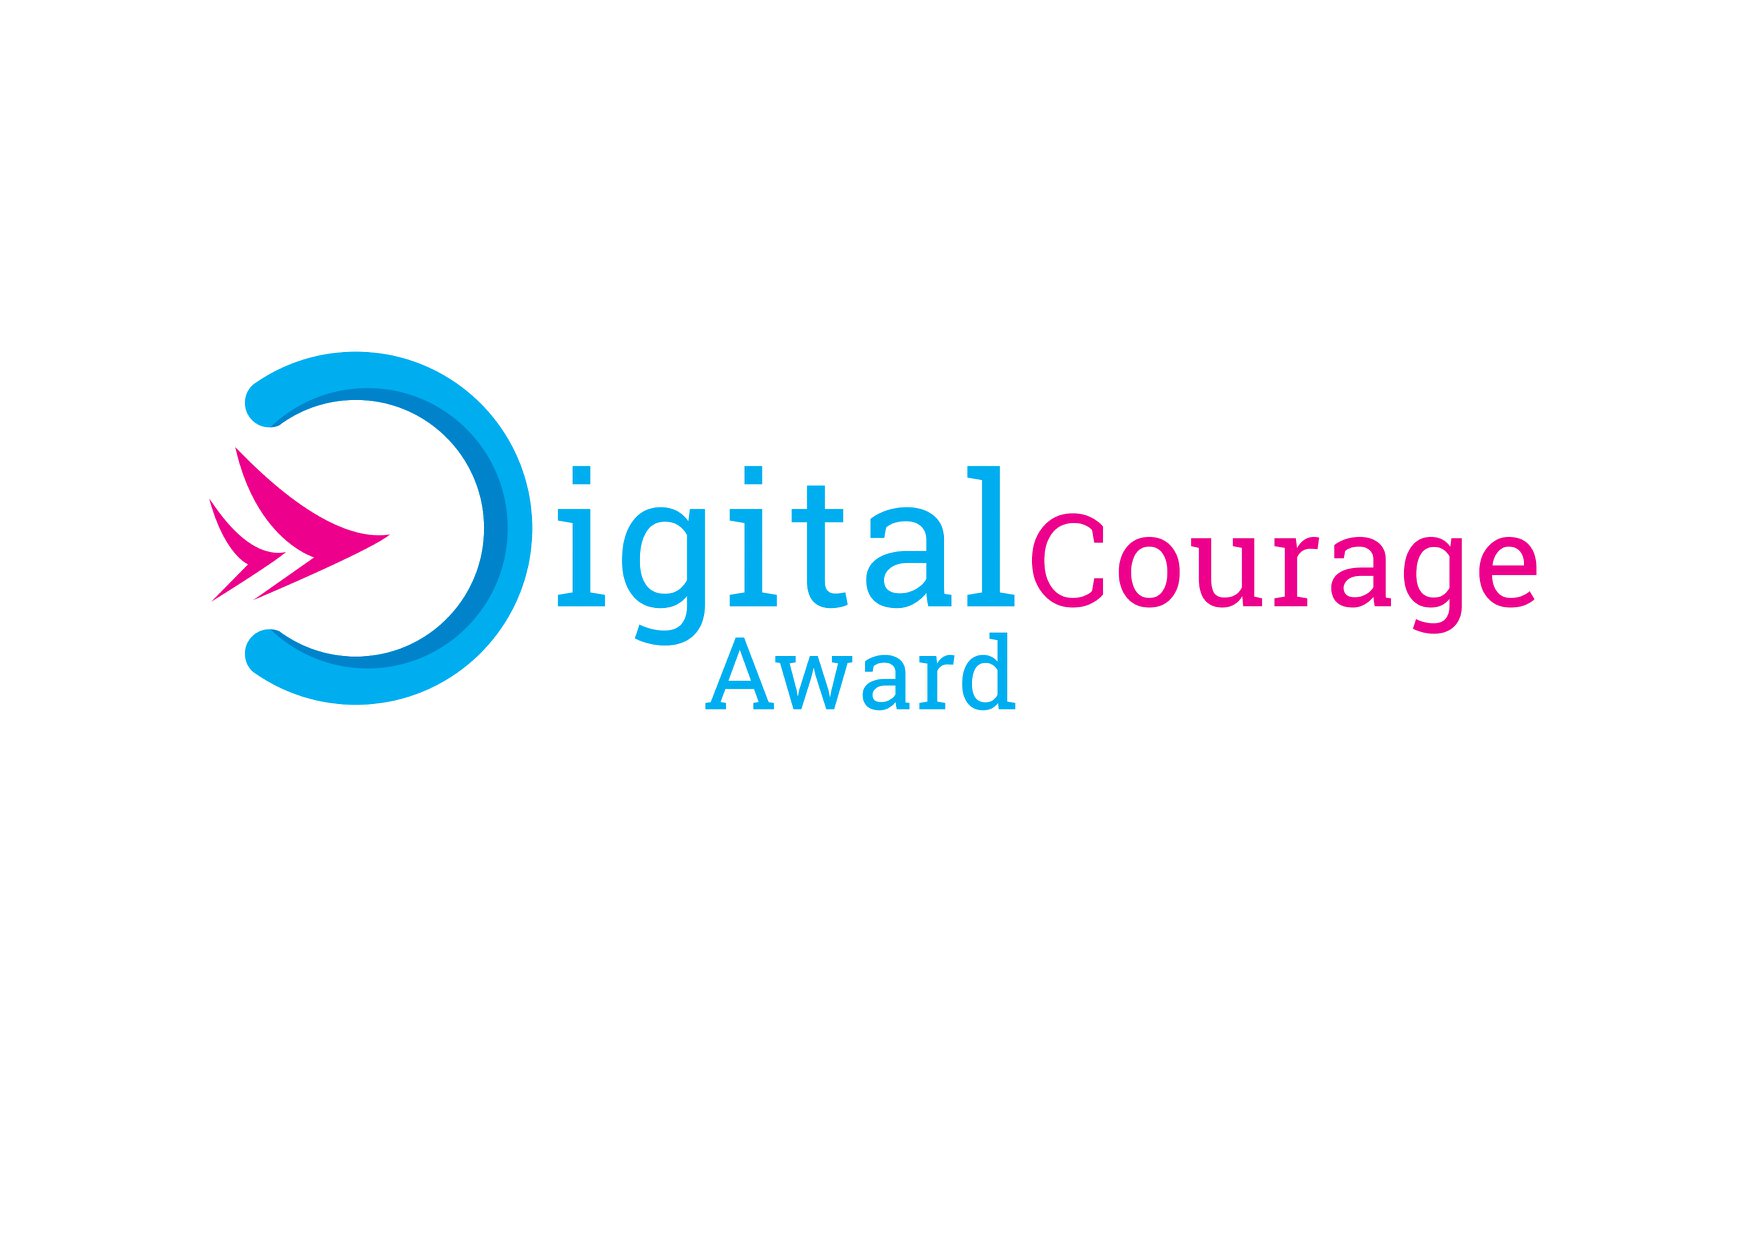 Digital Courage Award